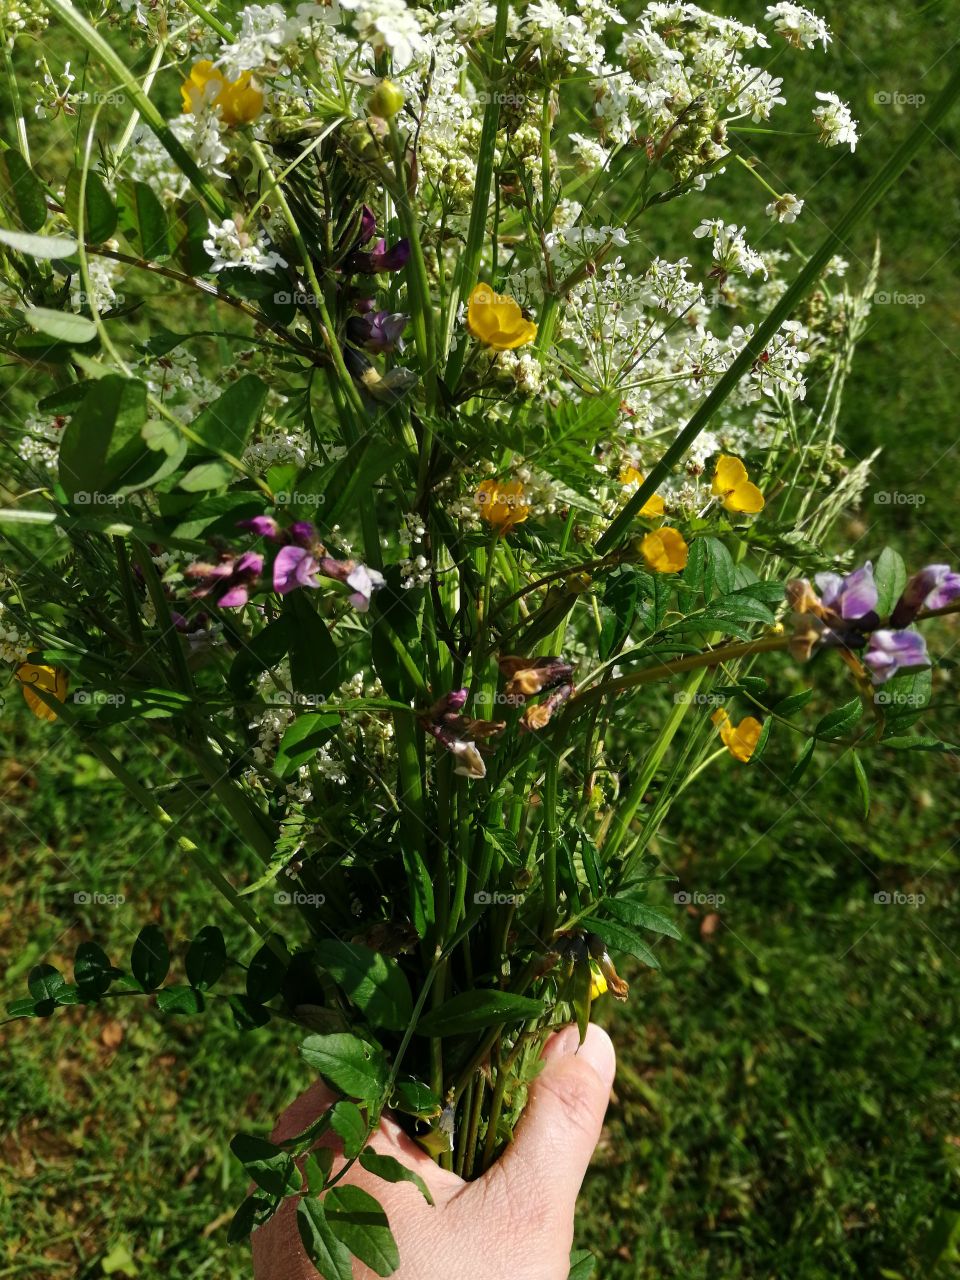 I picked wildflowers this weekend 😀